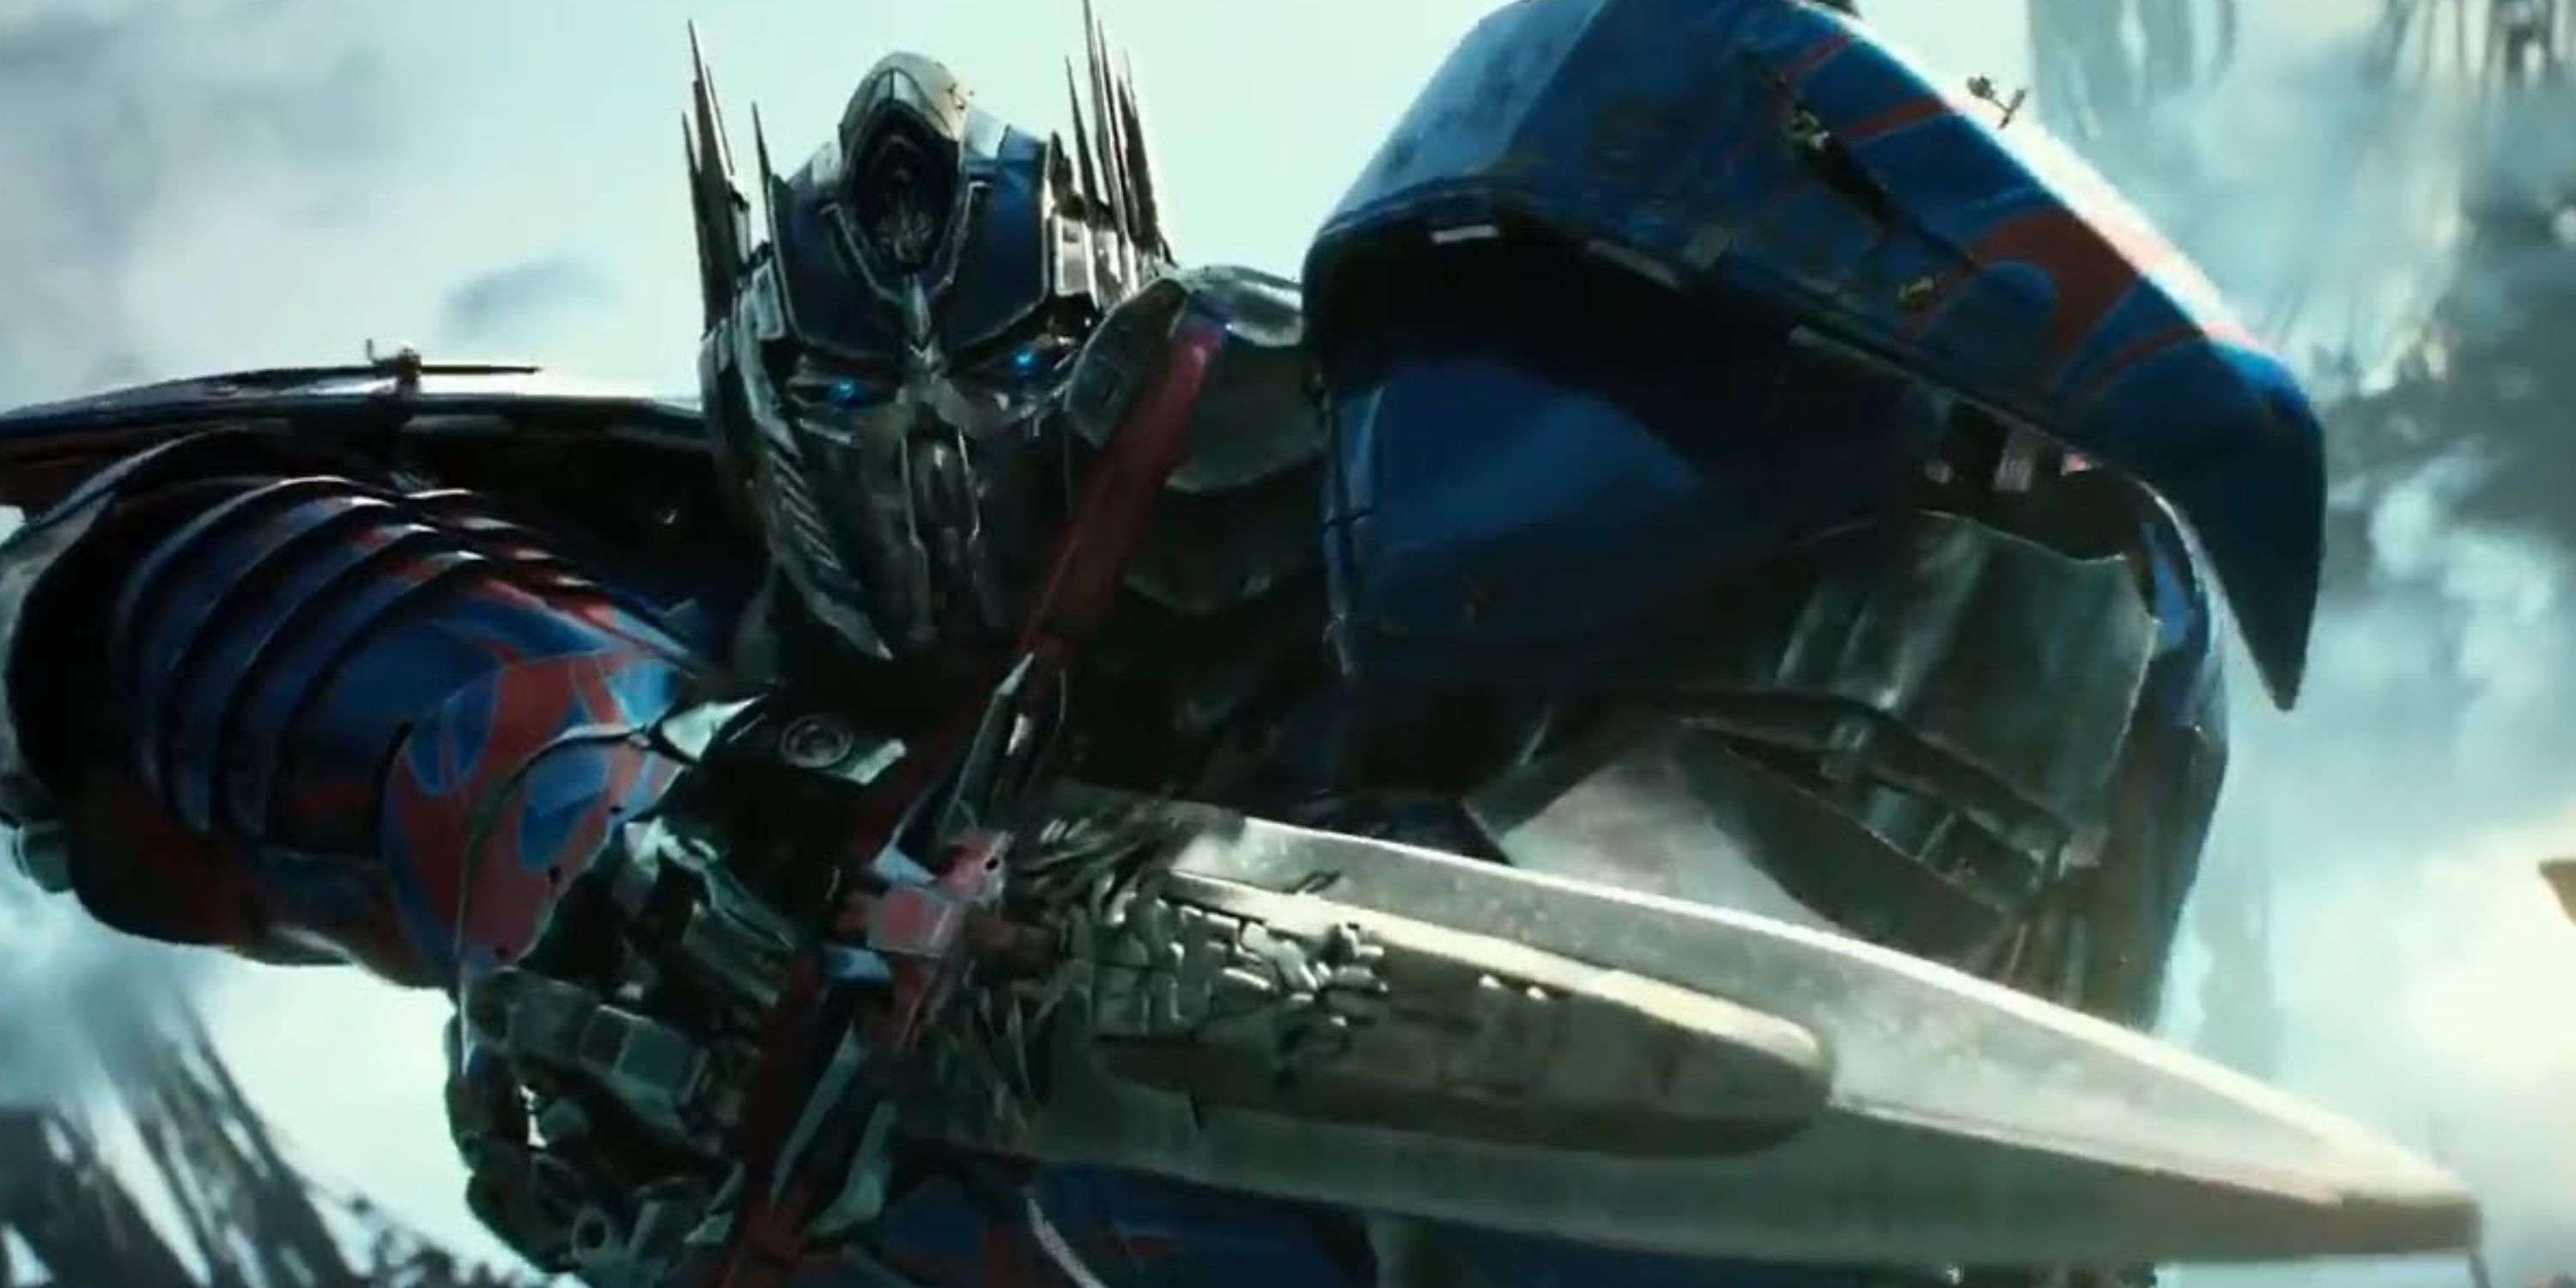 optimus prime using his sword to kill infernocus